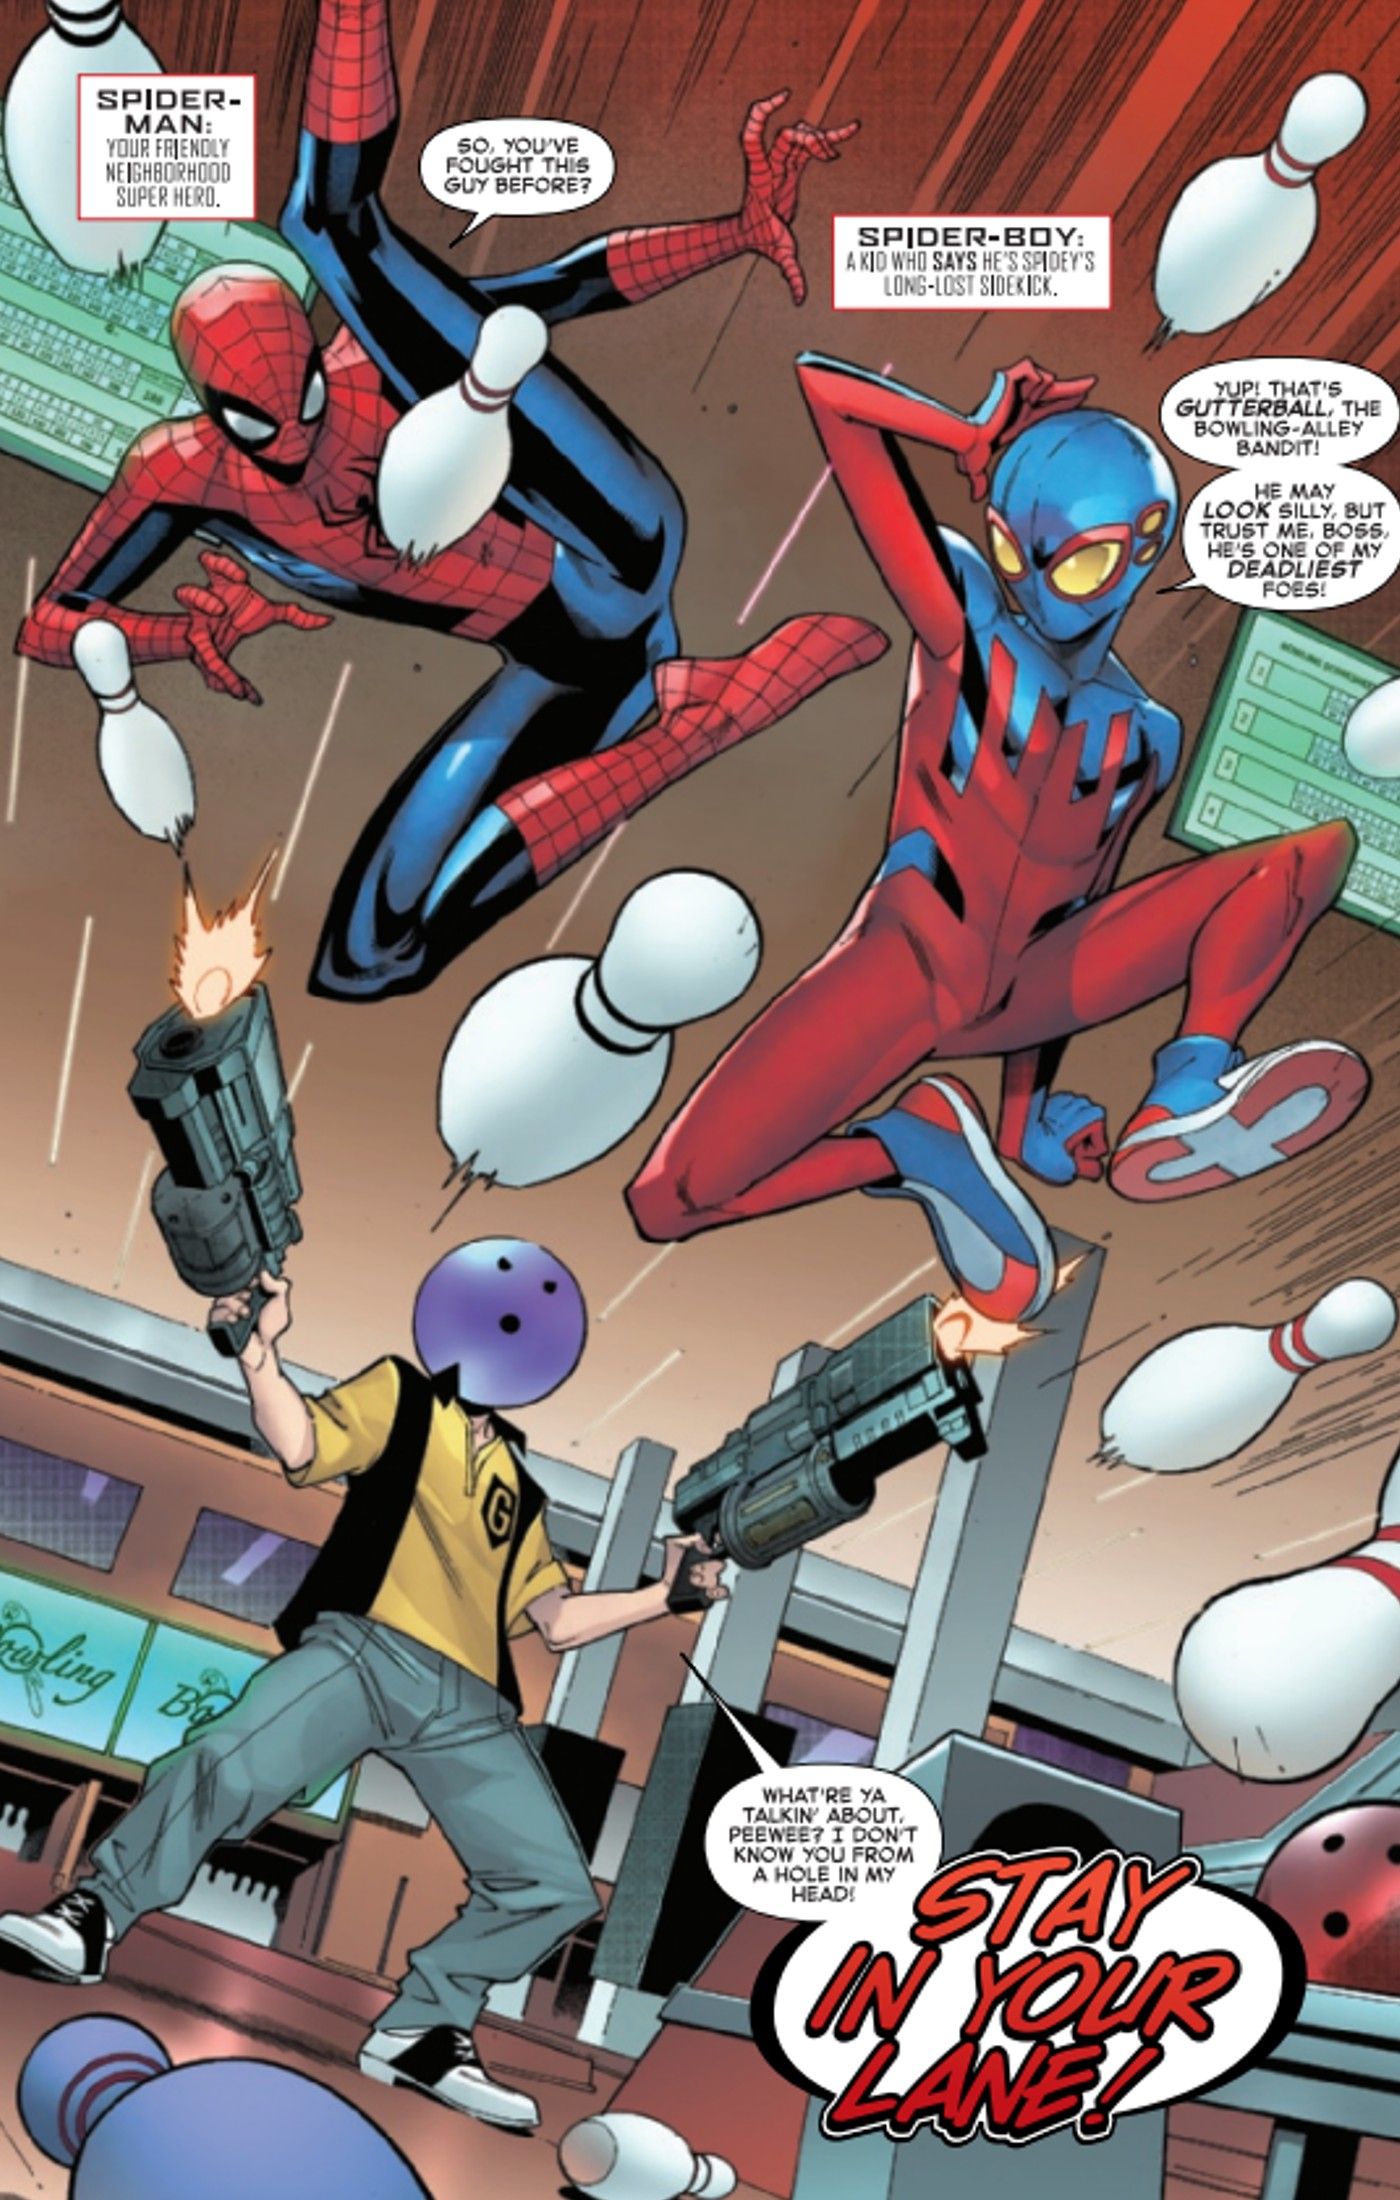 Gutterball, misterioso villano de Spider-Boy #1